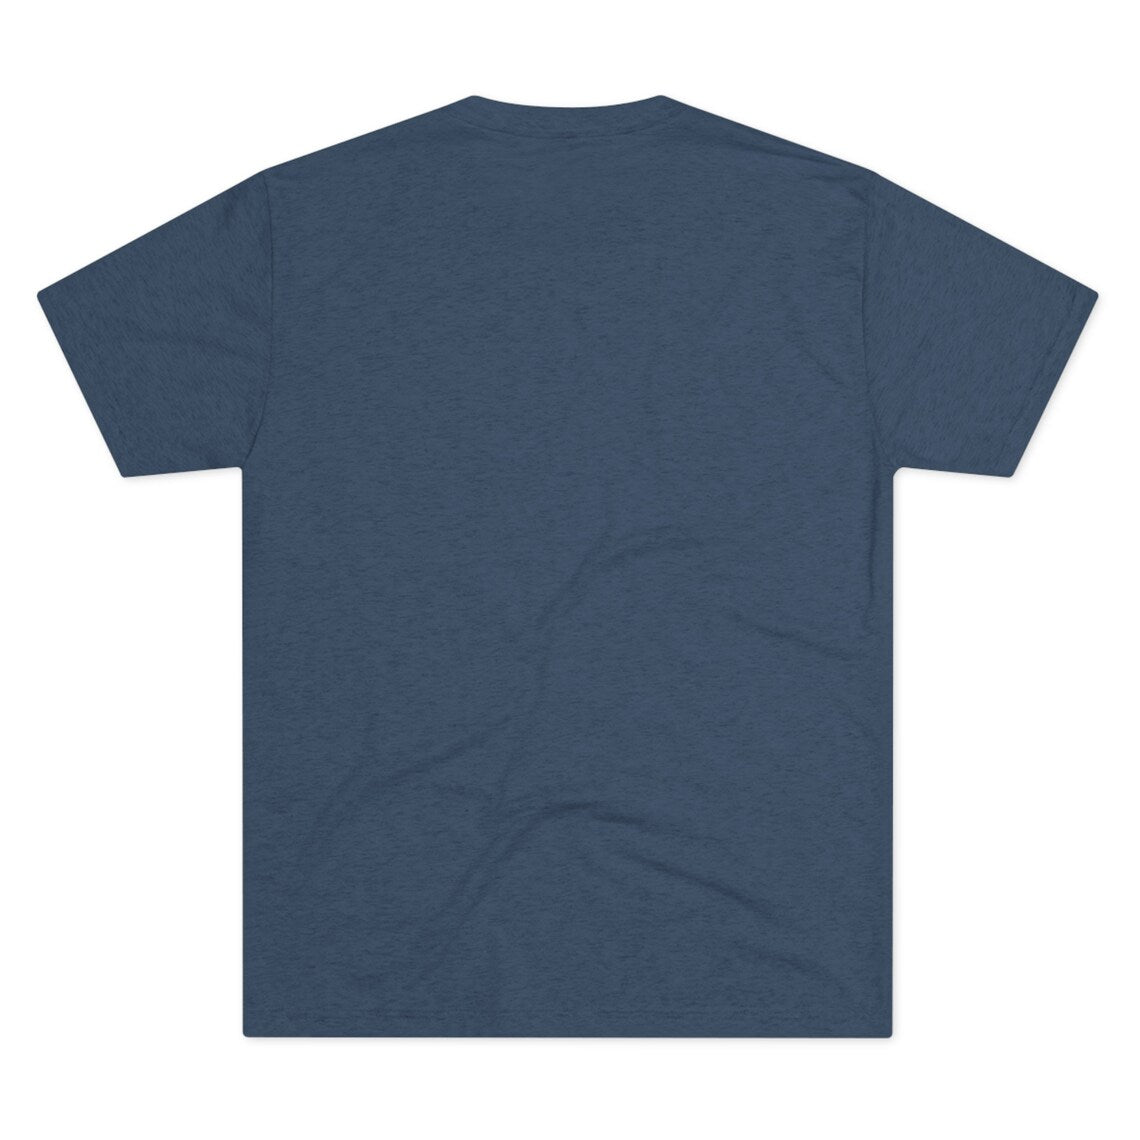 Mount Russell Peak Minimalist T Shirt